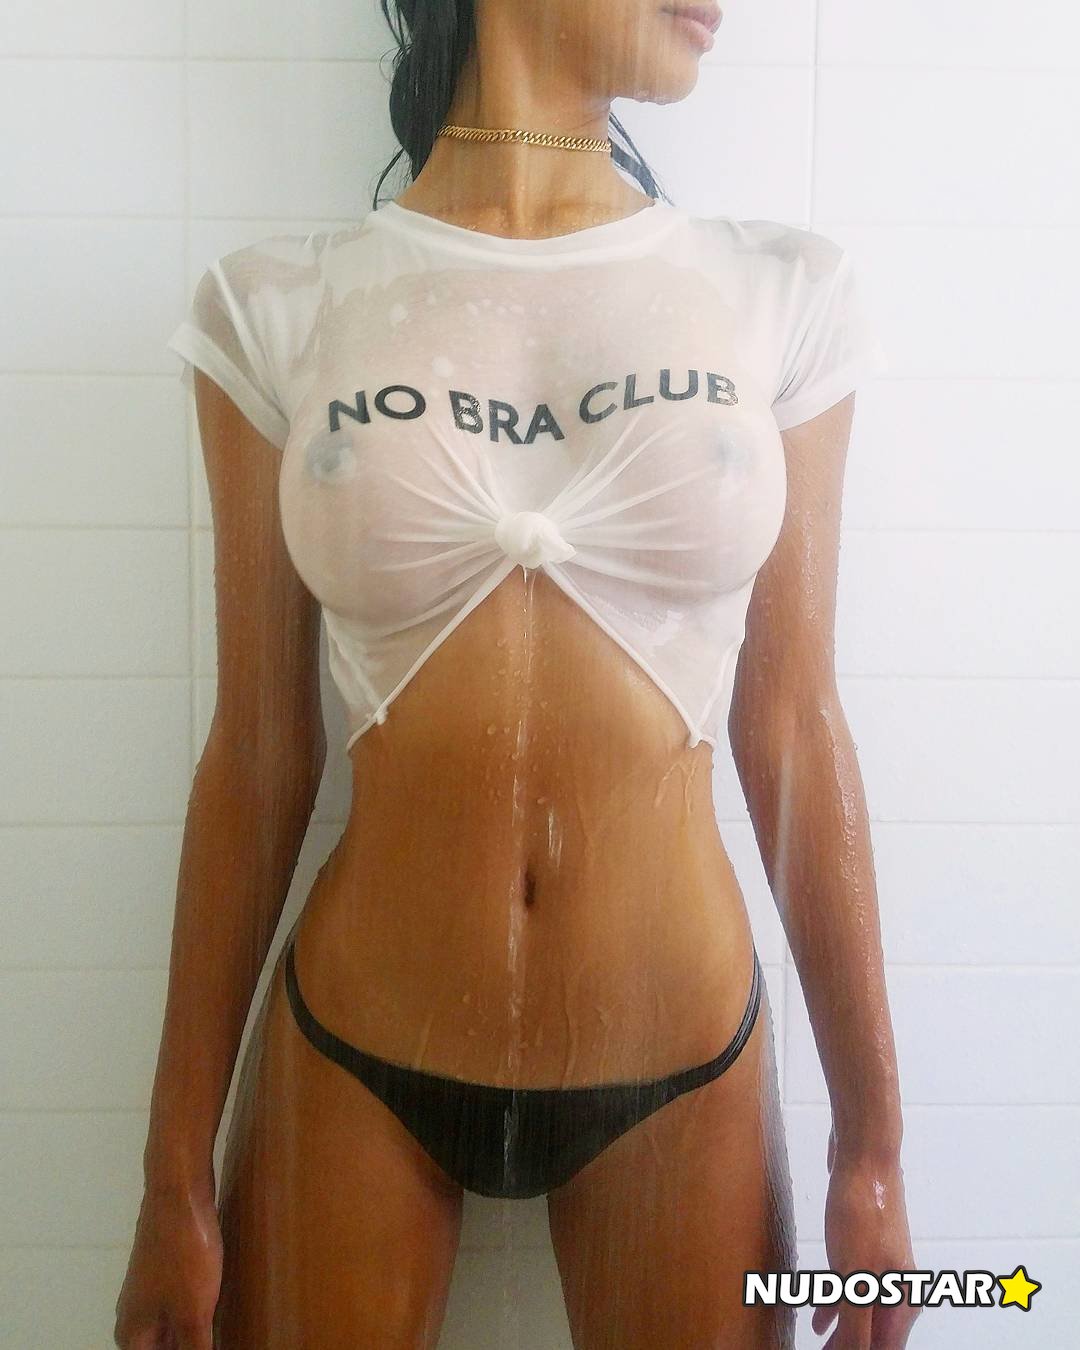 Dan Bilzerian Girlfriend Others Nude Models (19 Photos)